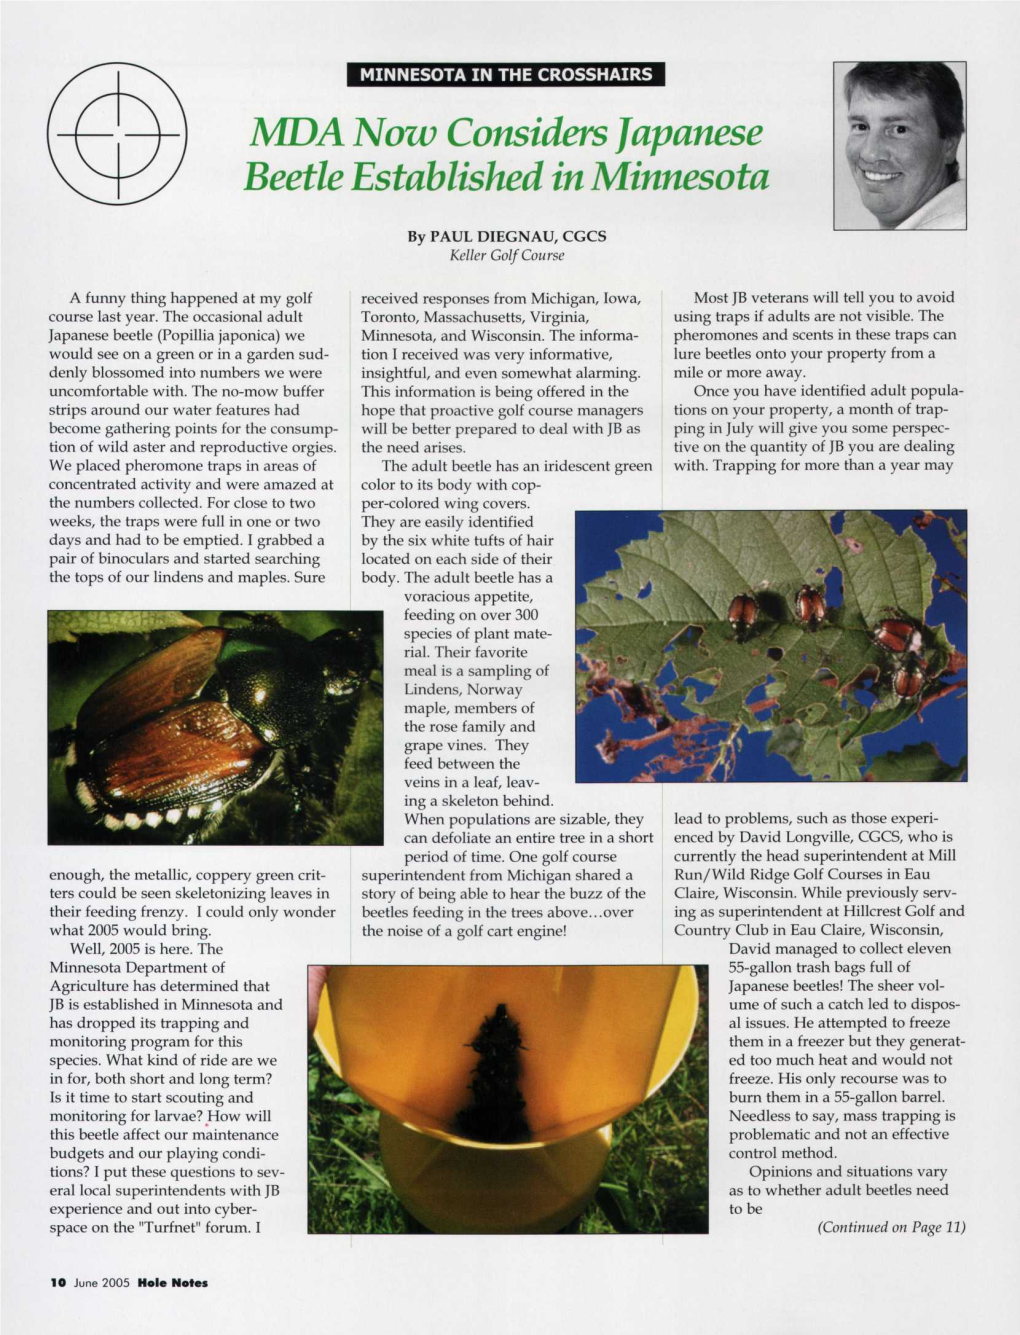 MDA Now Considers Japanese Beetle Established in Minnesota